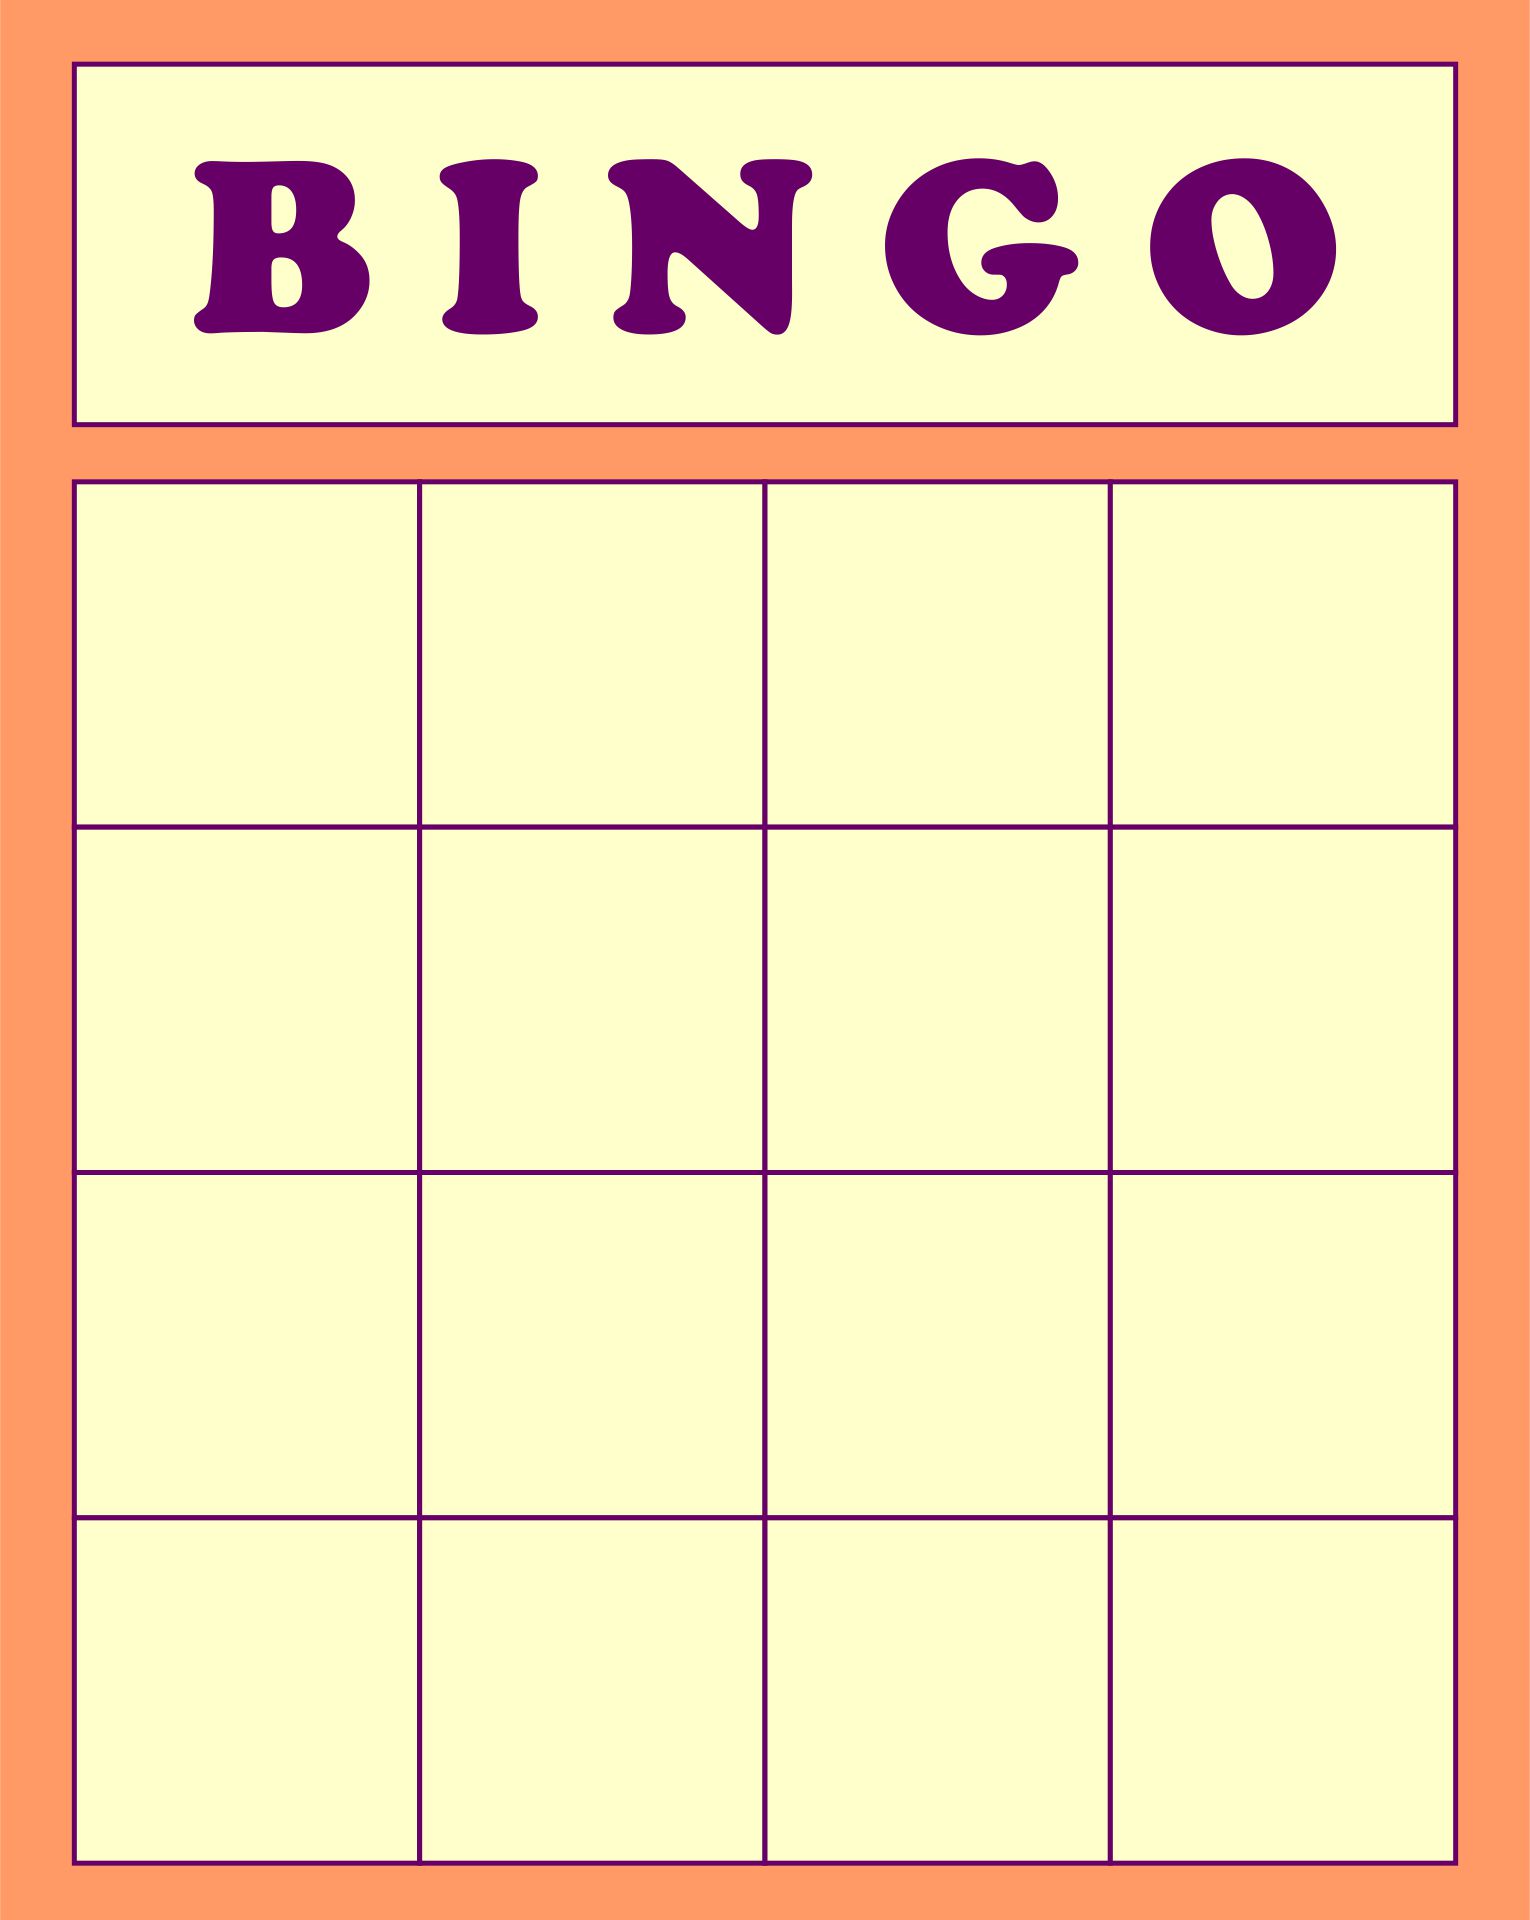 4x4-bingo-template